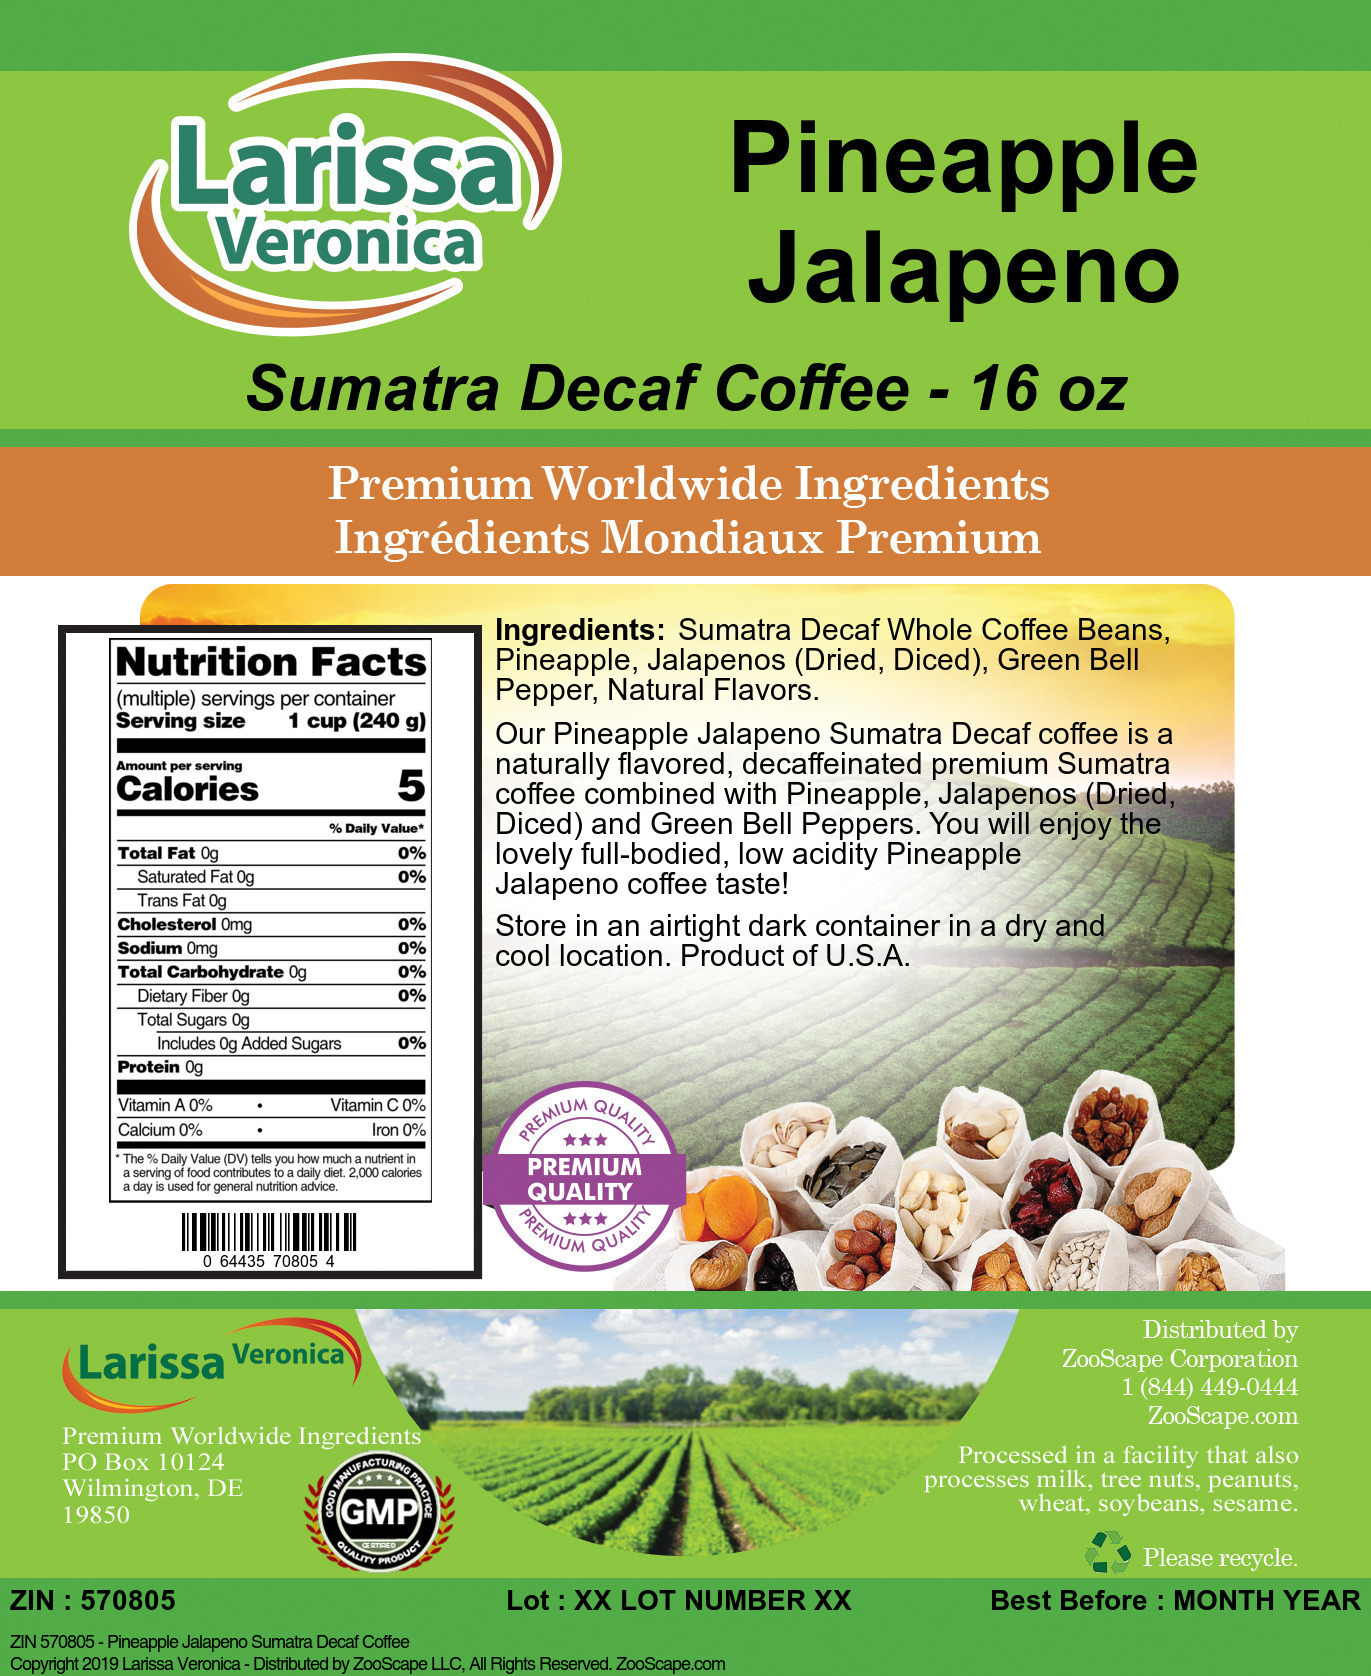 Pineapple Jalapeno Sumatra Decaf Coffee - Label